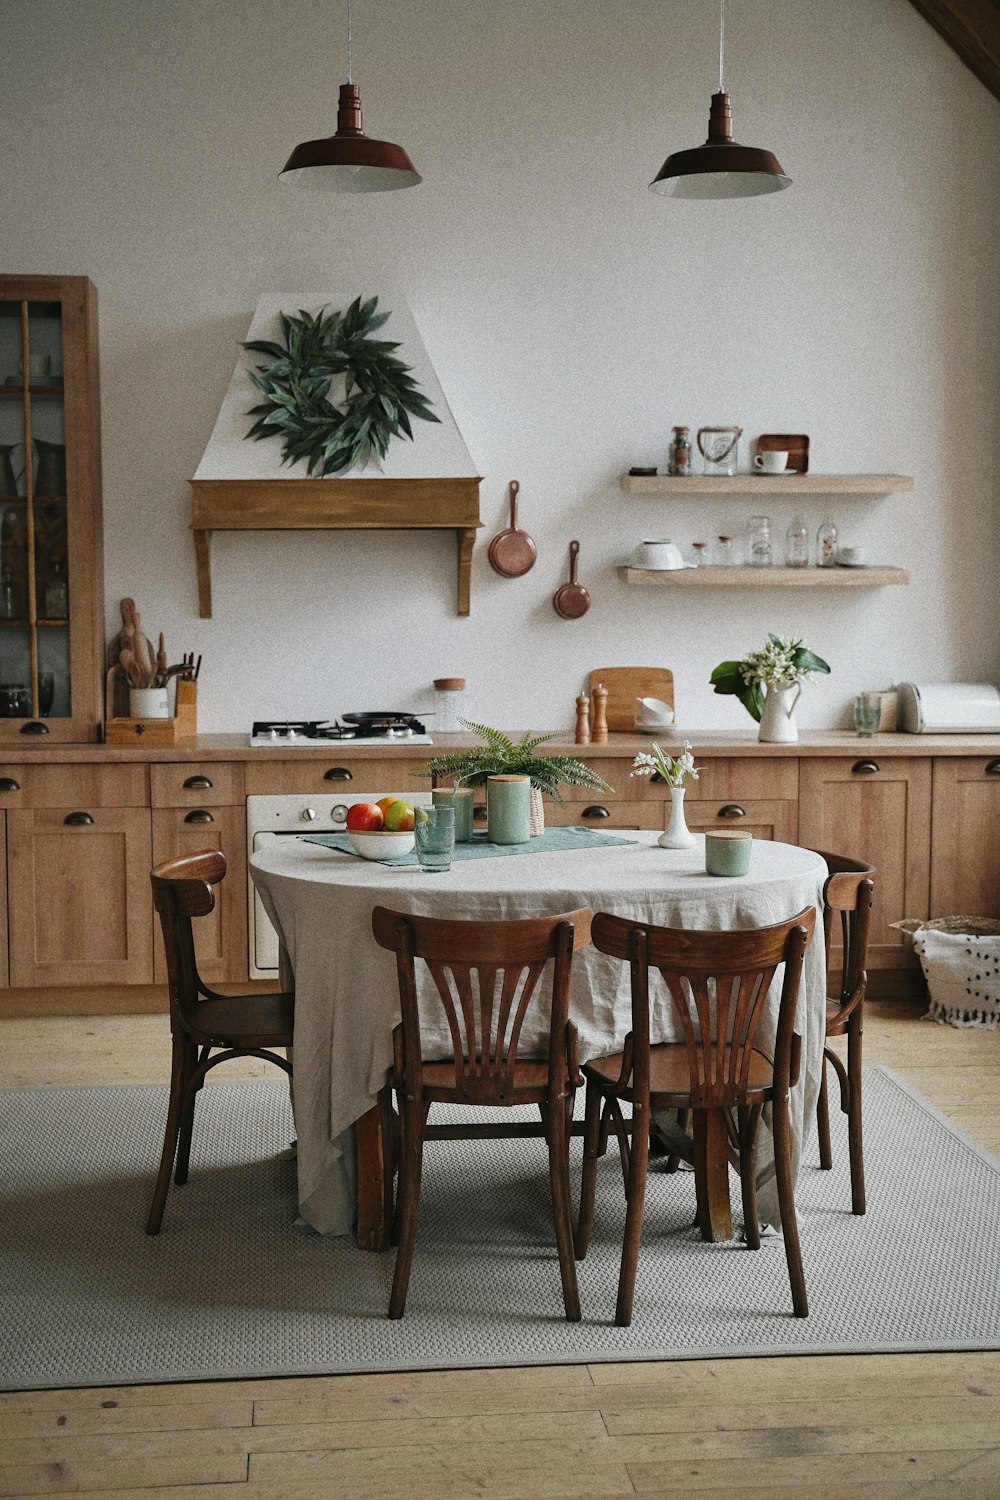 una cucina con tavolo e sedie e una pianta in vaso